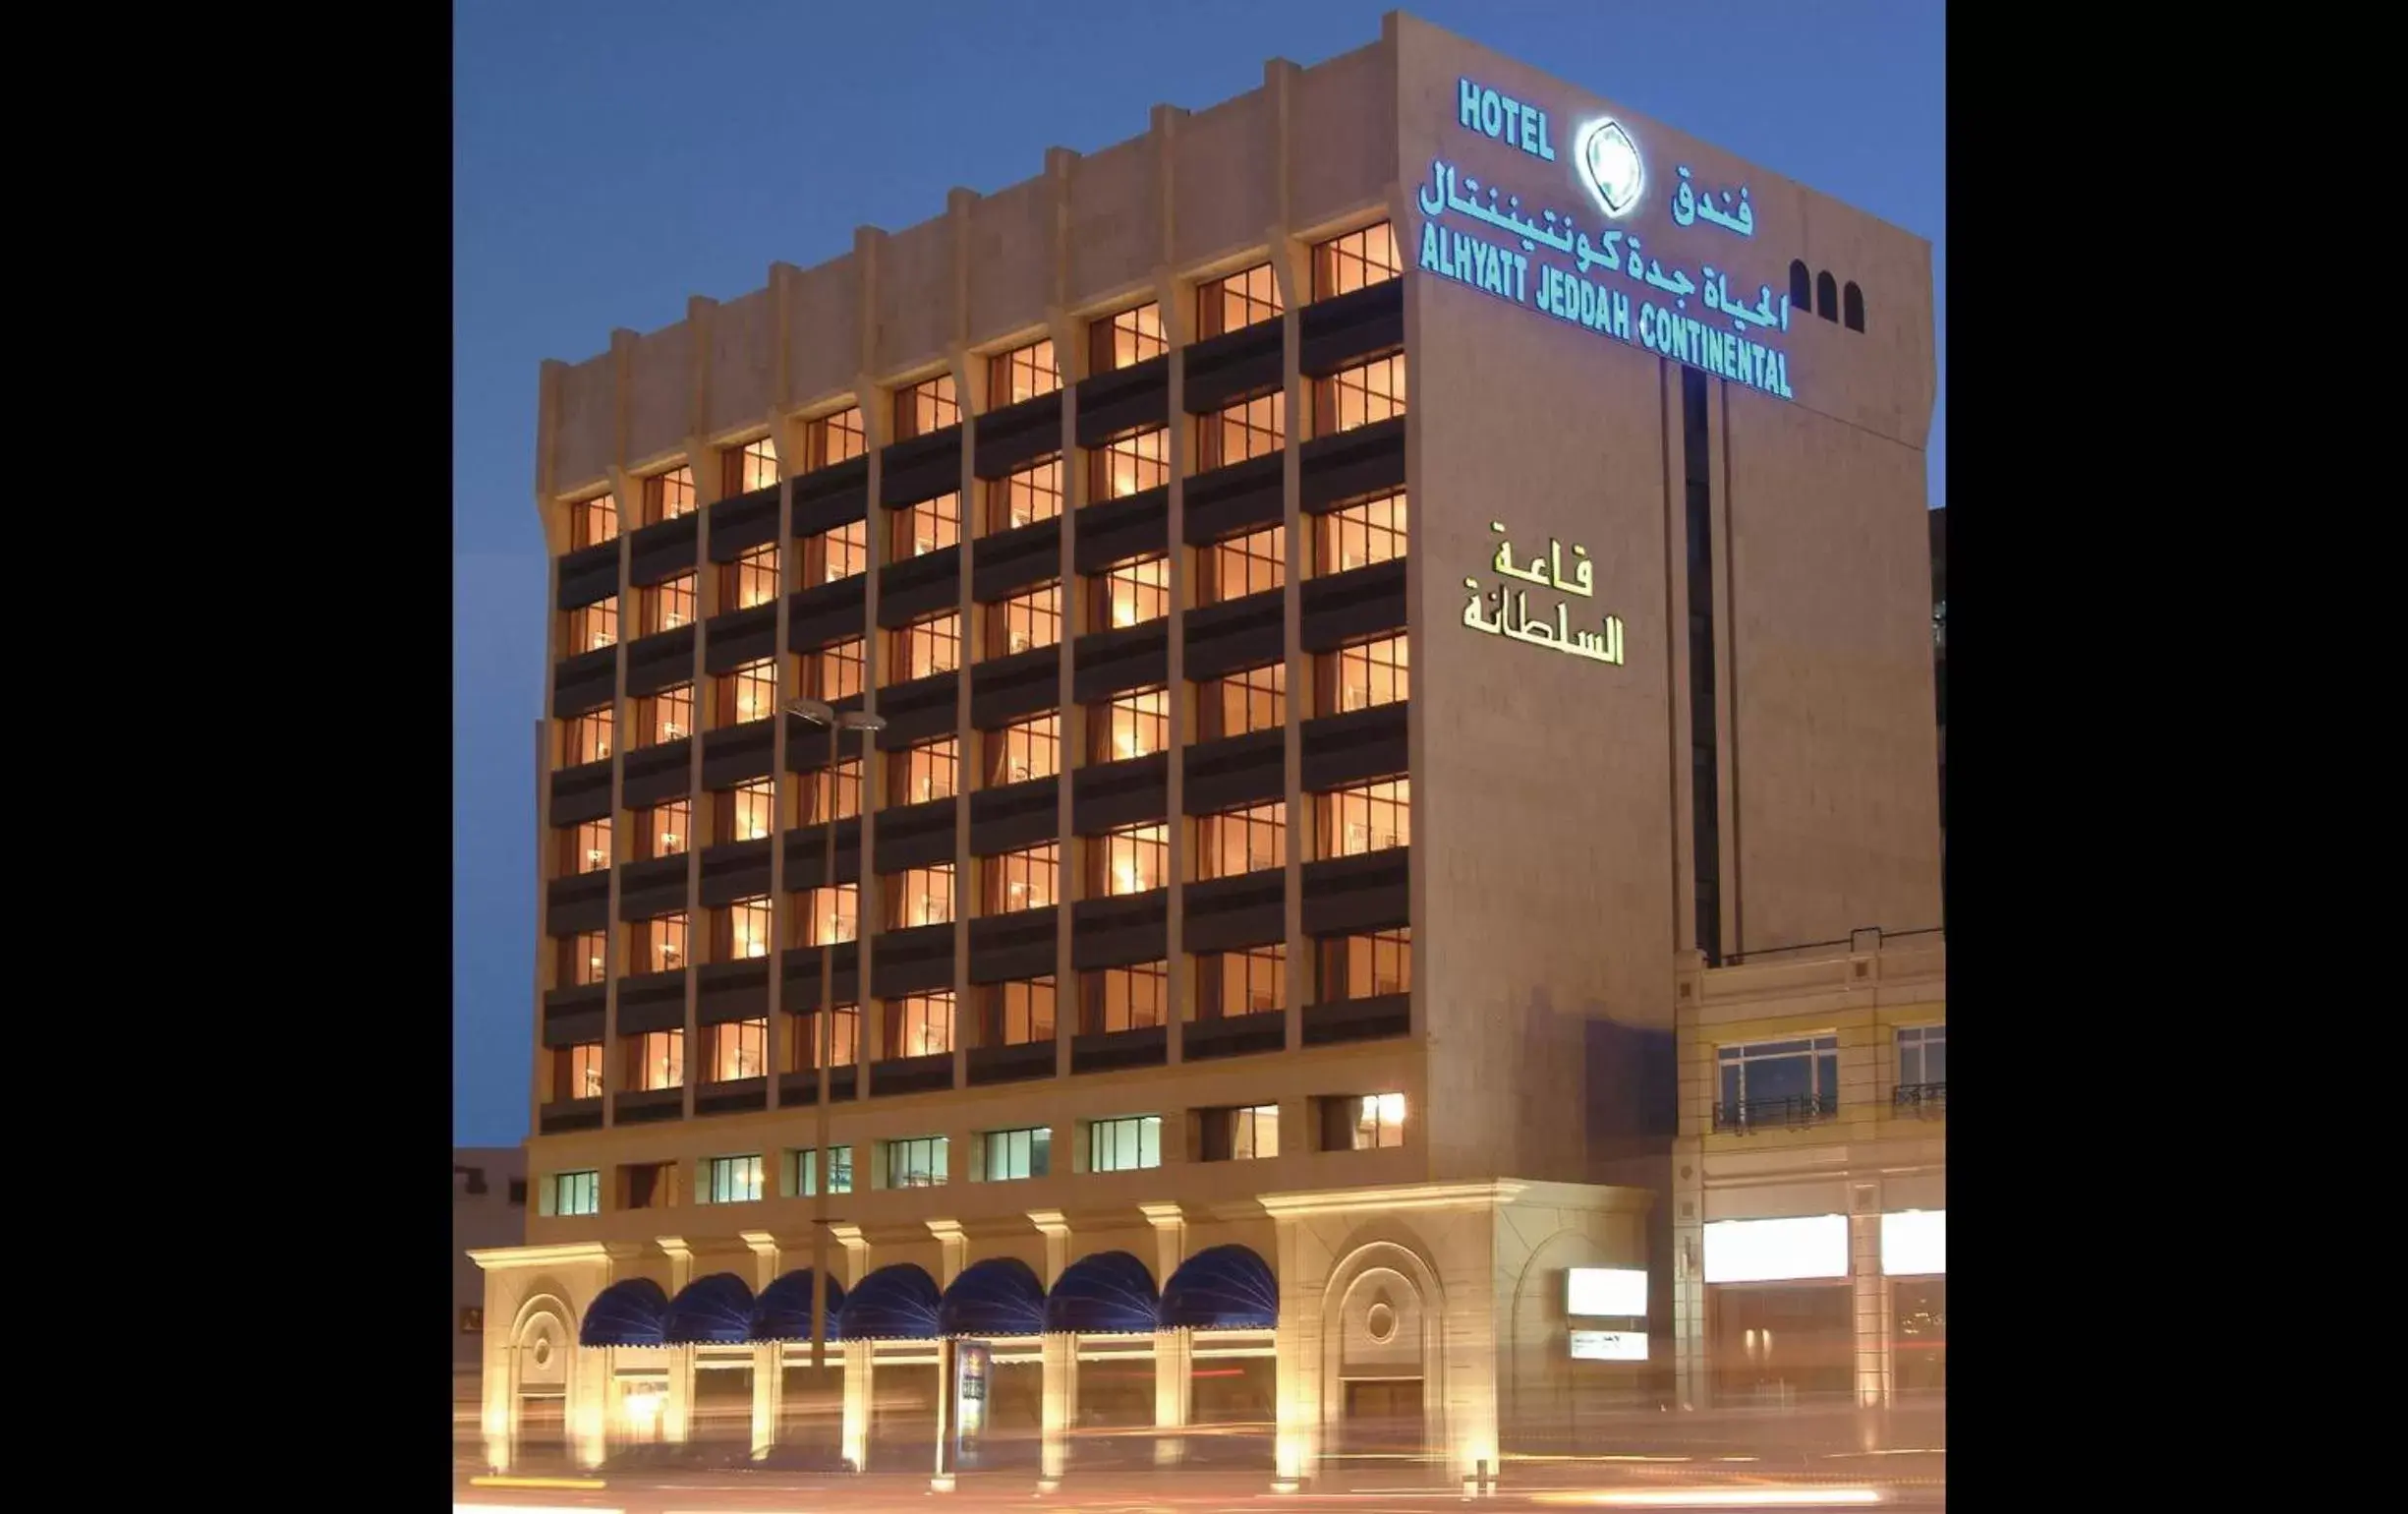 Property building in Al Hyatt Jeddah Continental Hotel